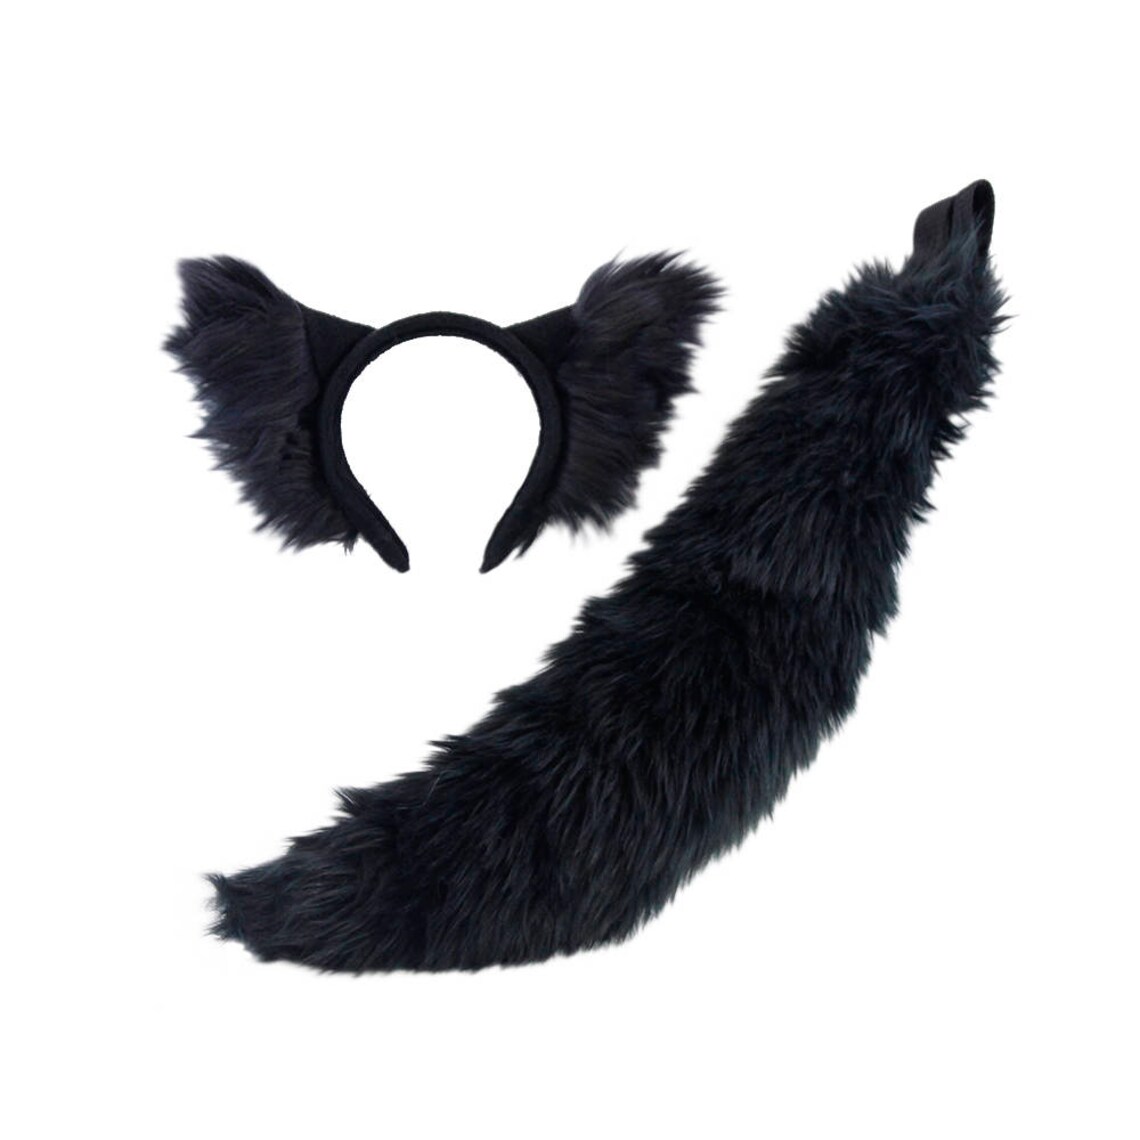 Pawstar Furry WOLF EAR & Mini TAIL Set Combo Deal Headband | Etsy